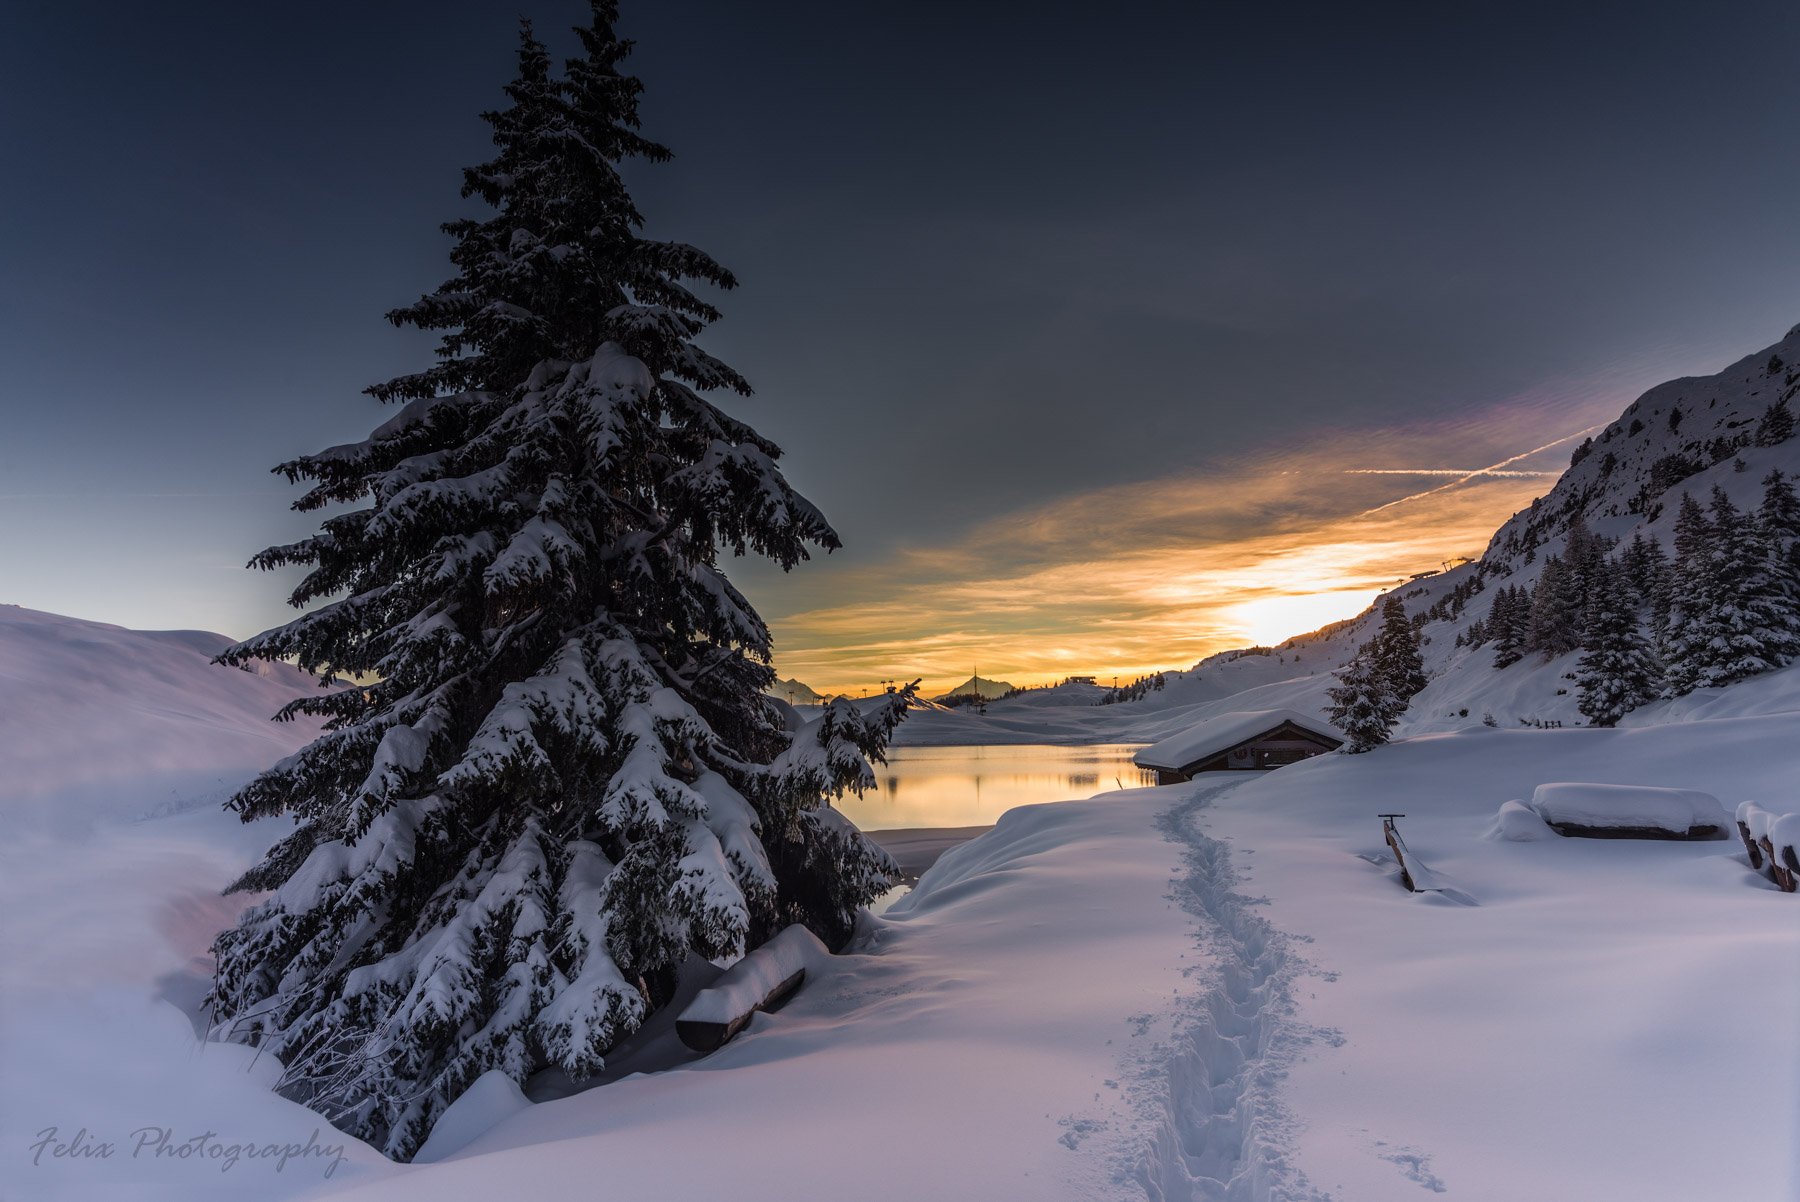 Winter,betmeralp,Long exposure,Switzerland,lake,tėtė,, Felix Ostapenko